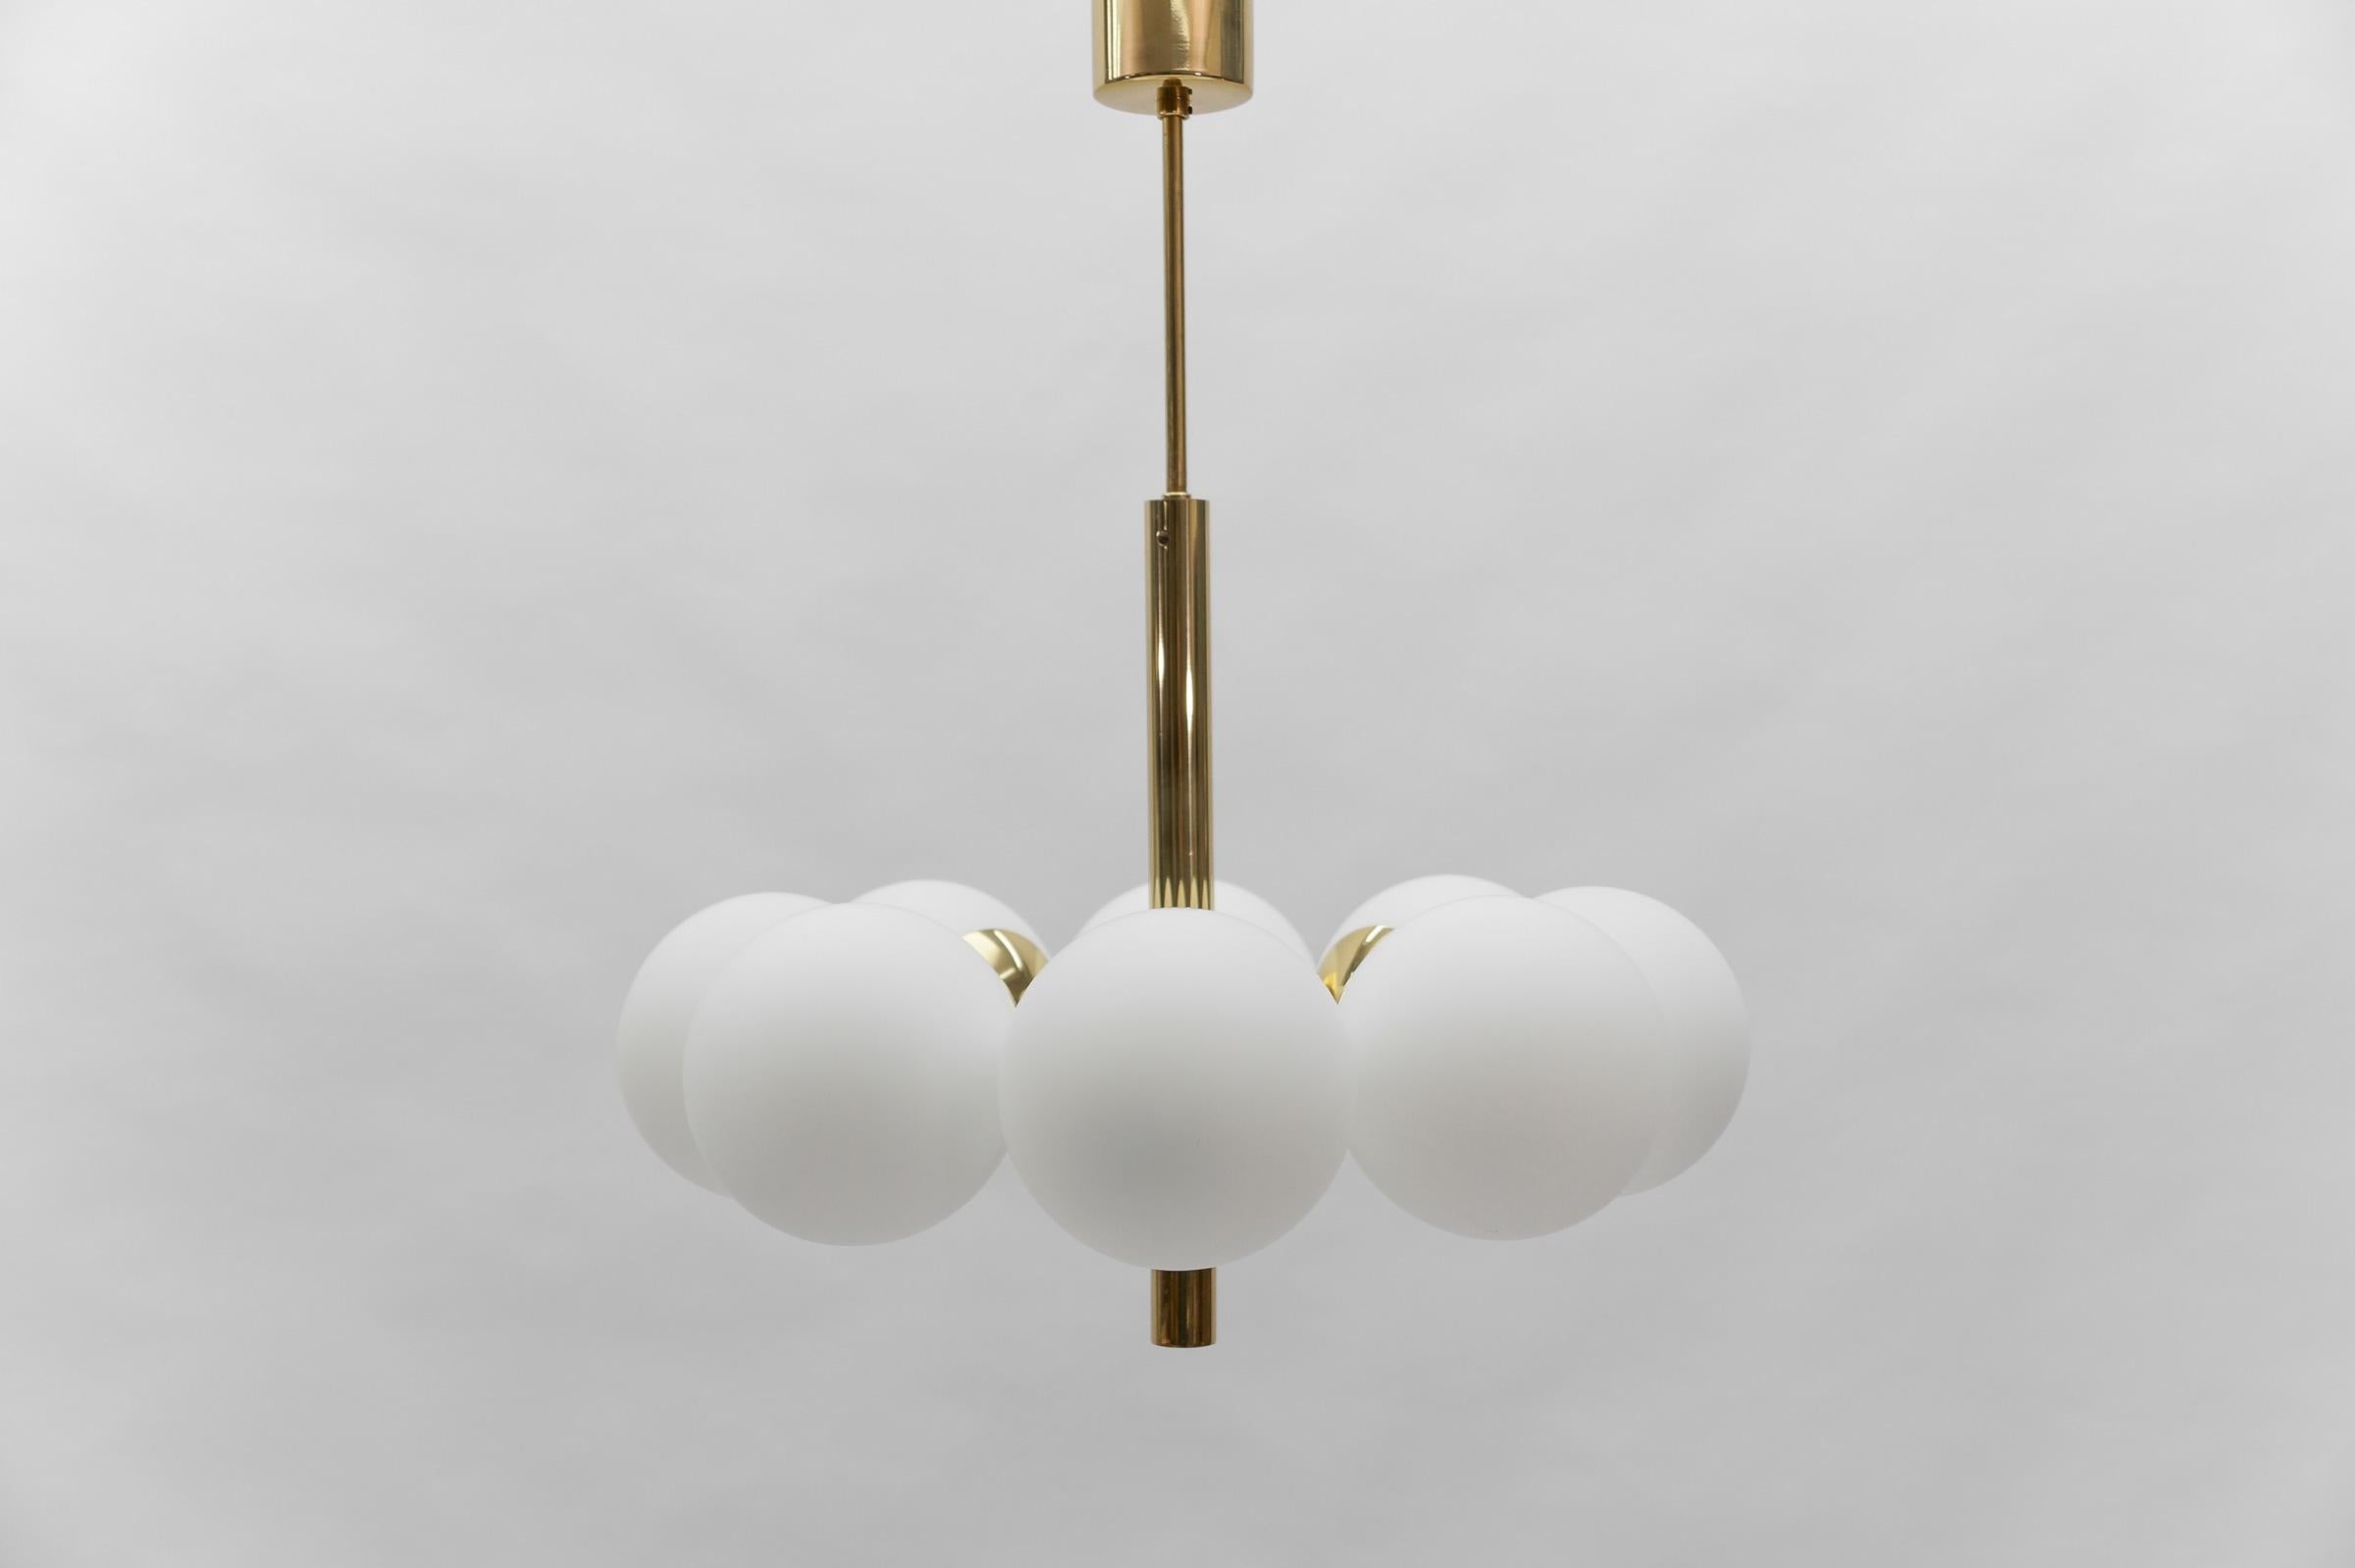 Mid-20th Century Mid-Century Modern Sputnik Pendant Lamp by Kaiser Leuchten, Germany1950s For Sale